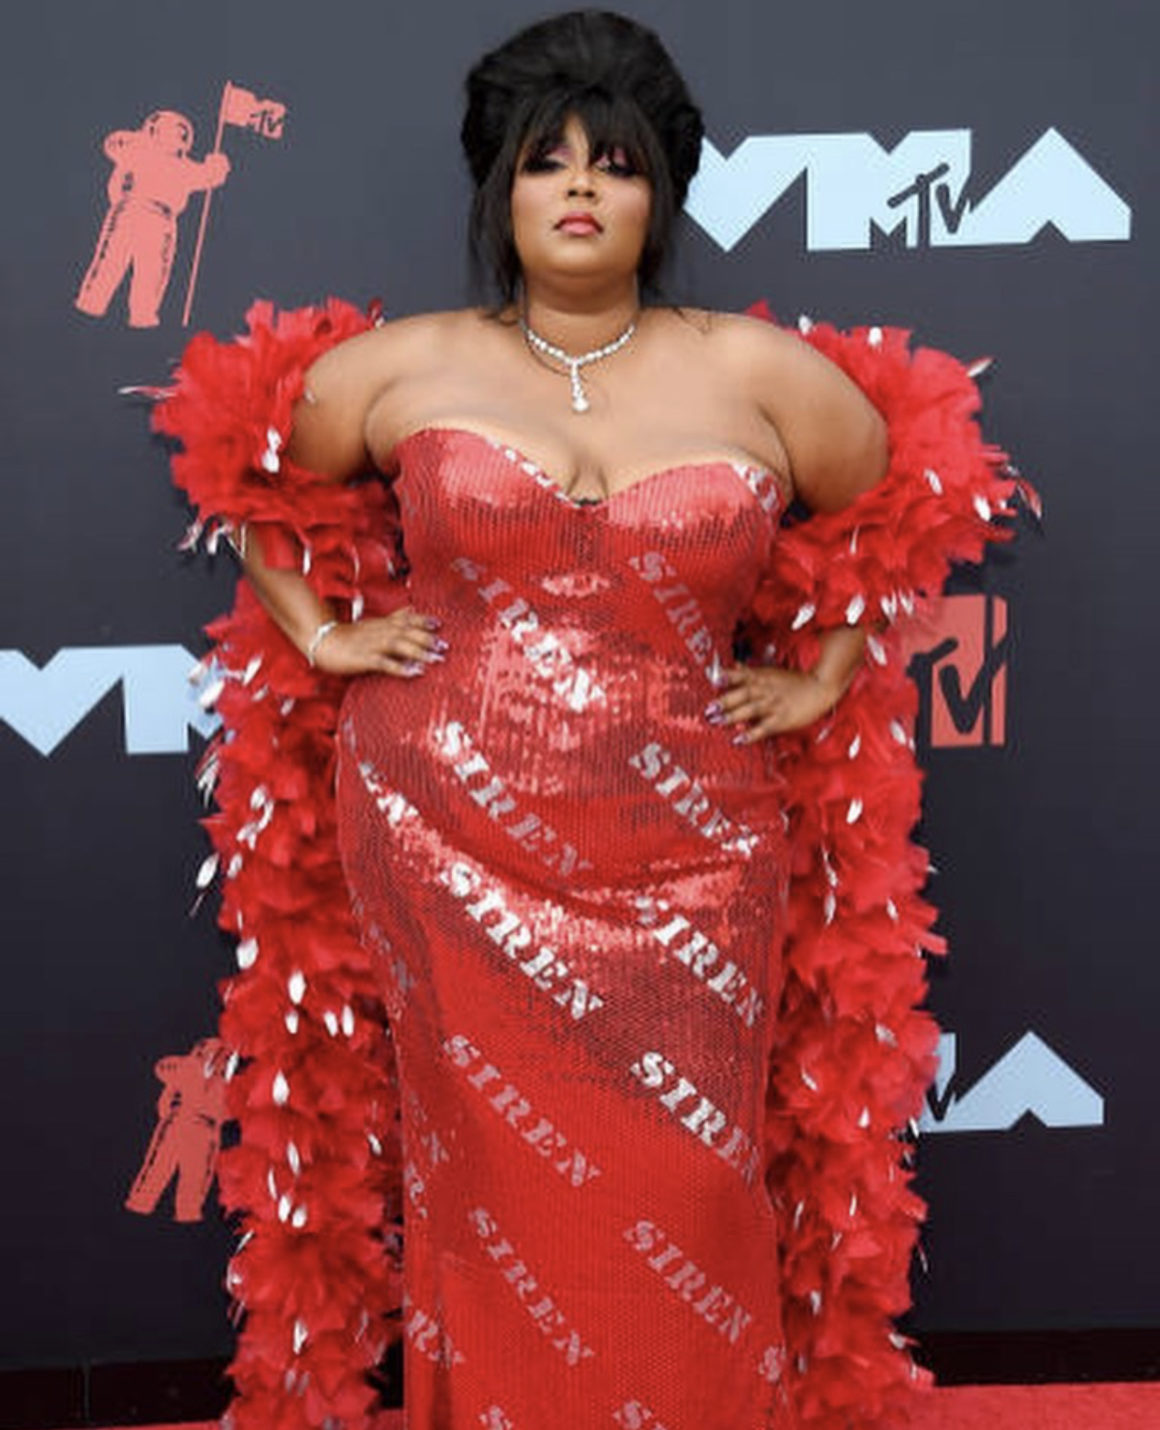 Nicki Minaj Slips Into Satin Gown & Sandals at MTV VMAs Afterparty